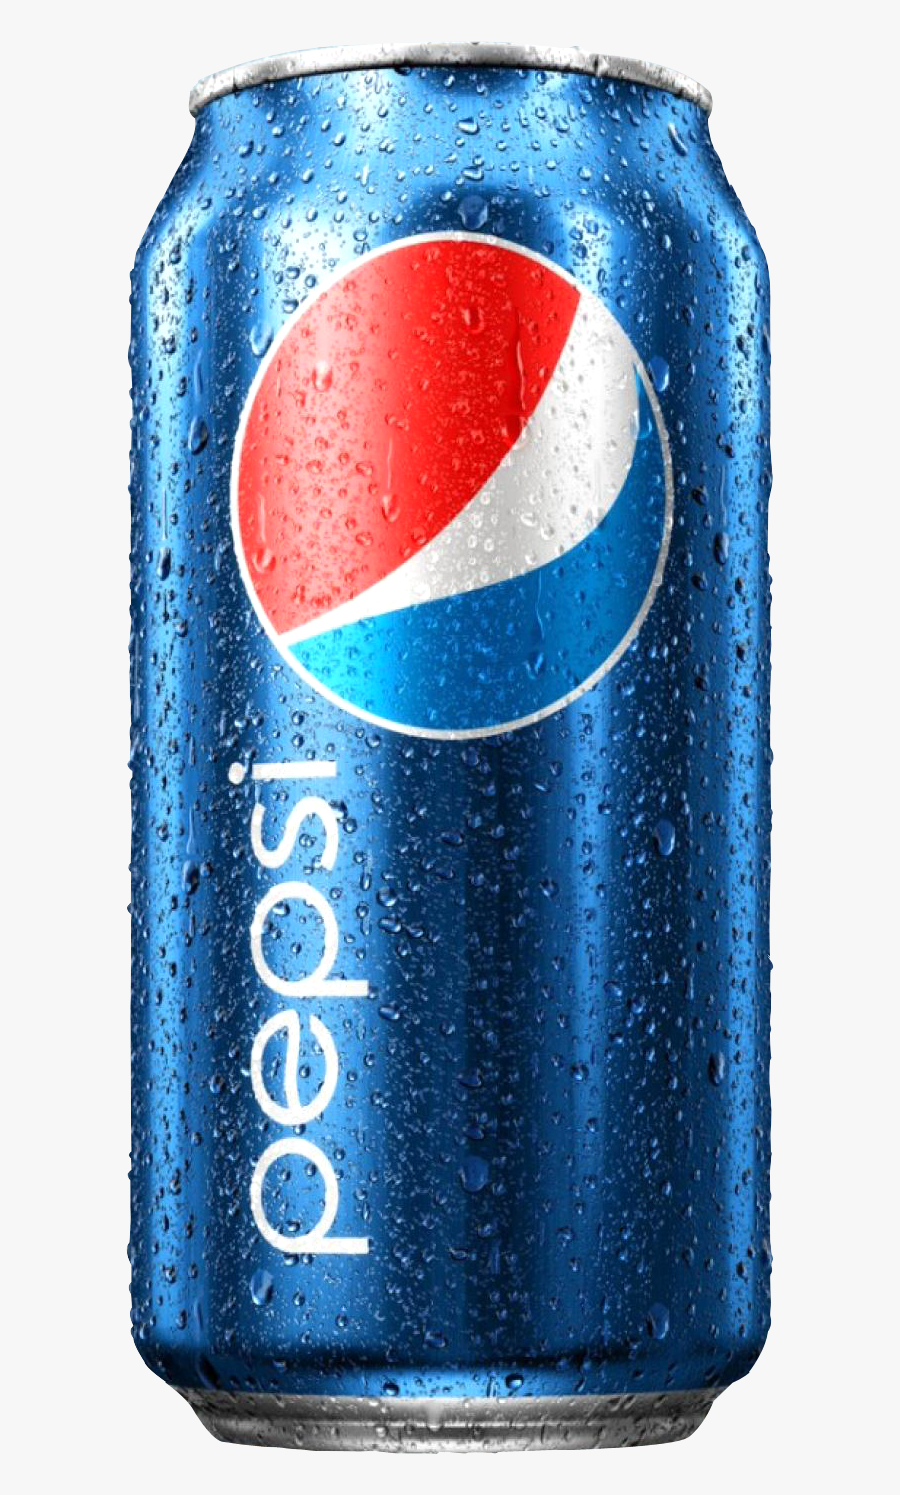 Pepsi Png Free Download - Pepsi Transparent, Transparent Clipart